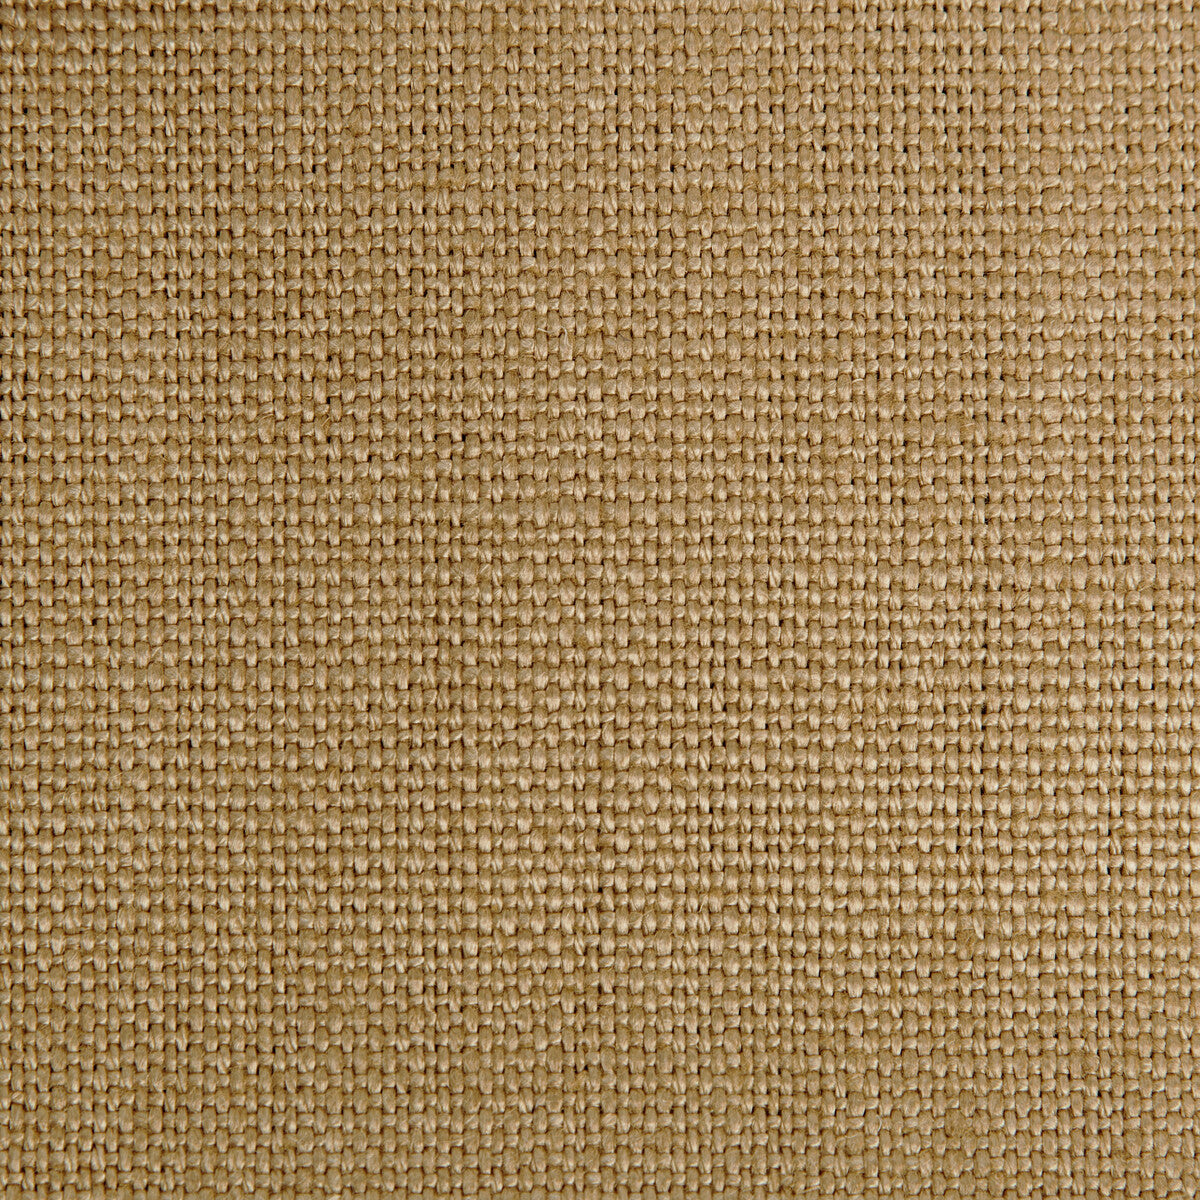 Stone Harbor fabric in harvest color - pattern 27591.44.0 - by Kravet Basics